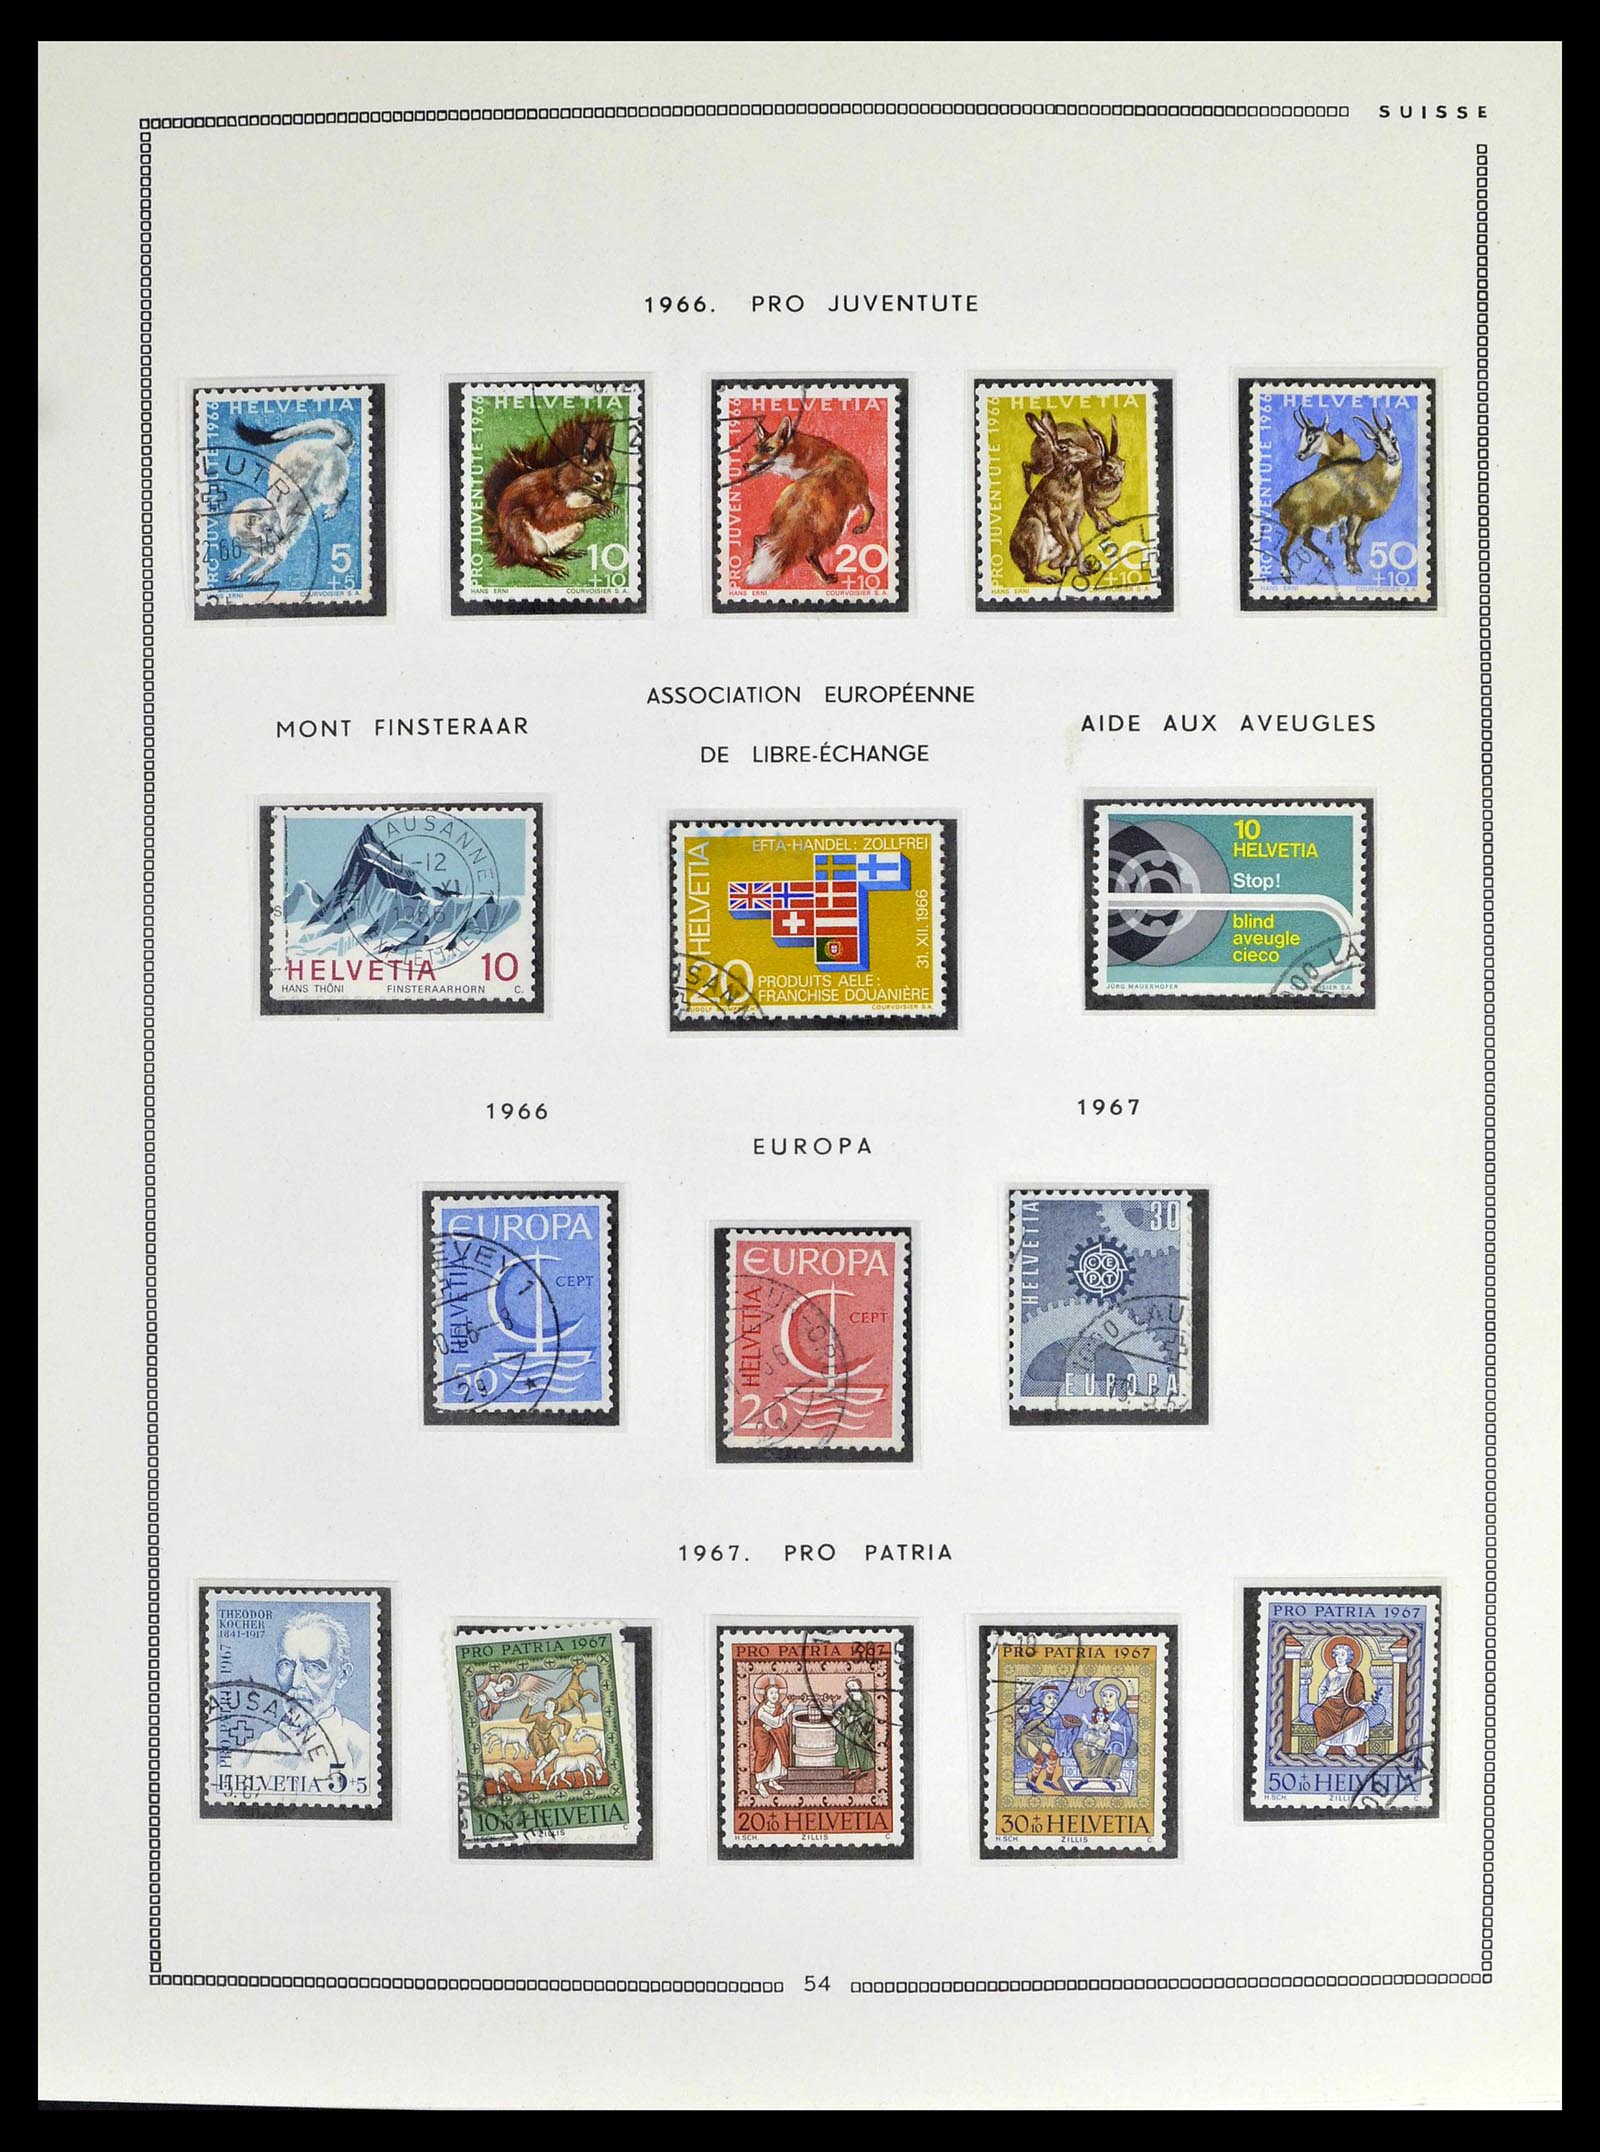 39094 0052 - Stamp collection 39094 Switzerland 1850-2005.